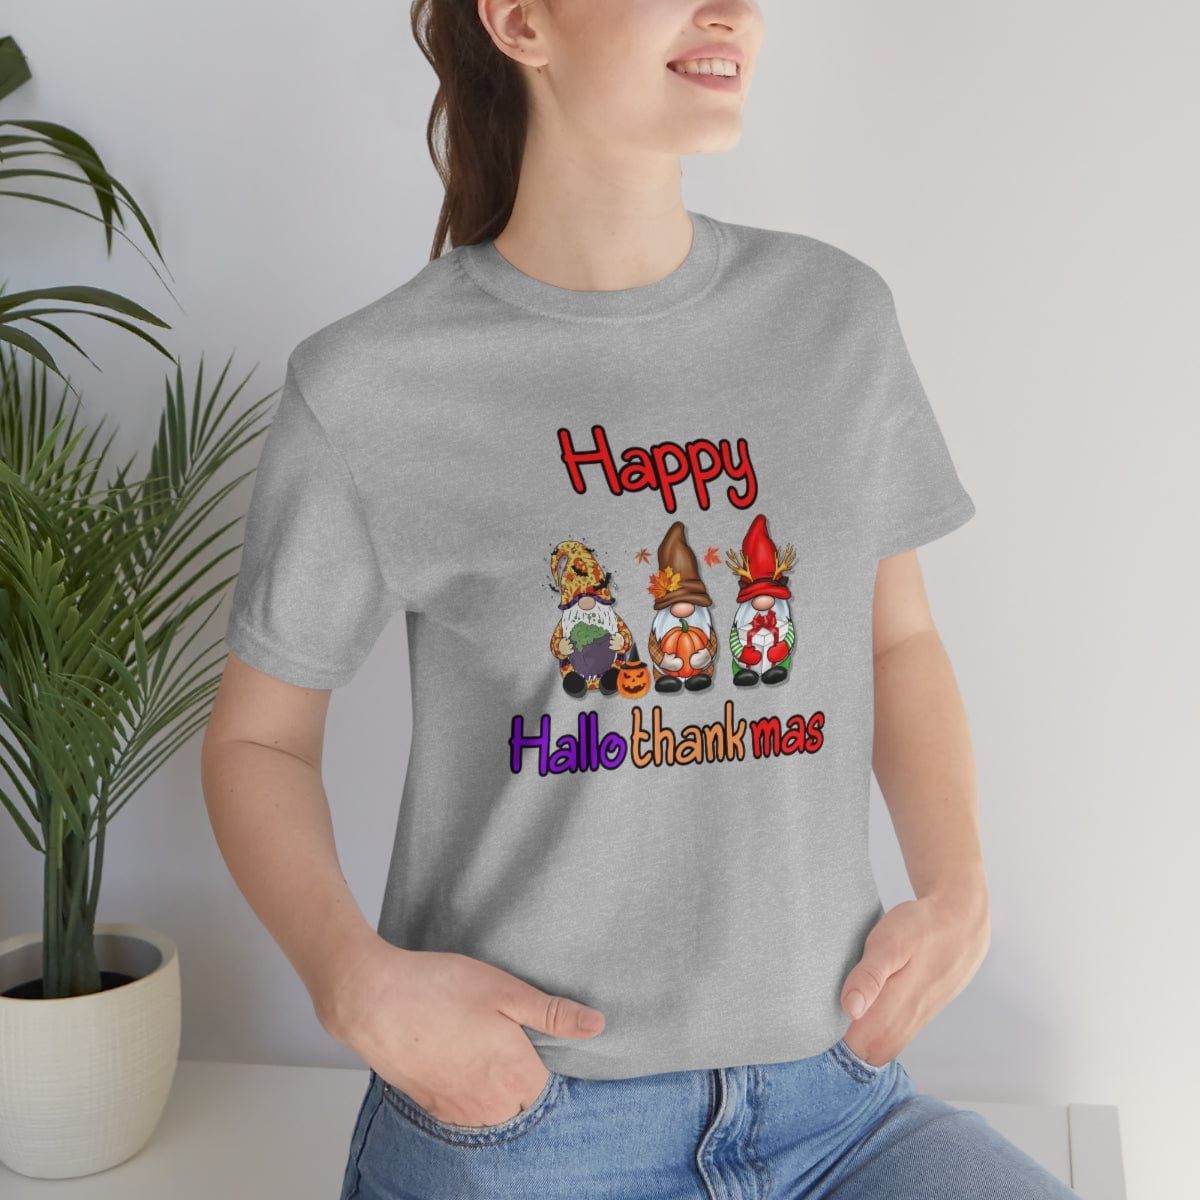 Printify T-Shirt Athletic Heather / S Holiday Shirt For Women or Men, Hallothankmas shirt, Graphic Tee, Cute  Shirts, Christmas Shirt 28249672942983190290